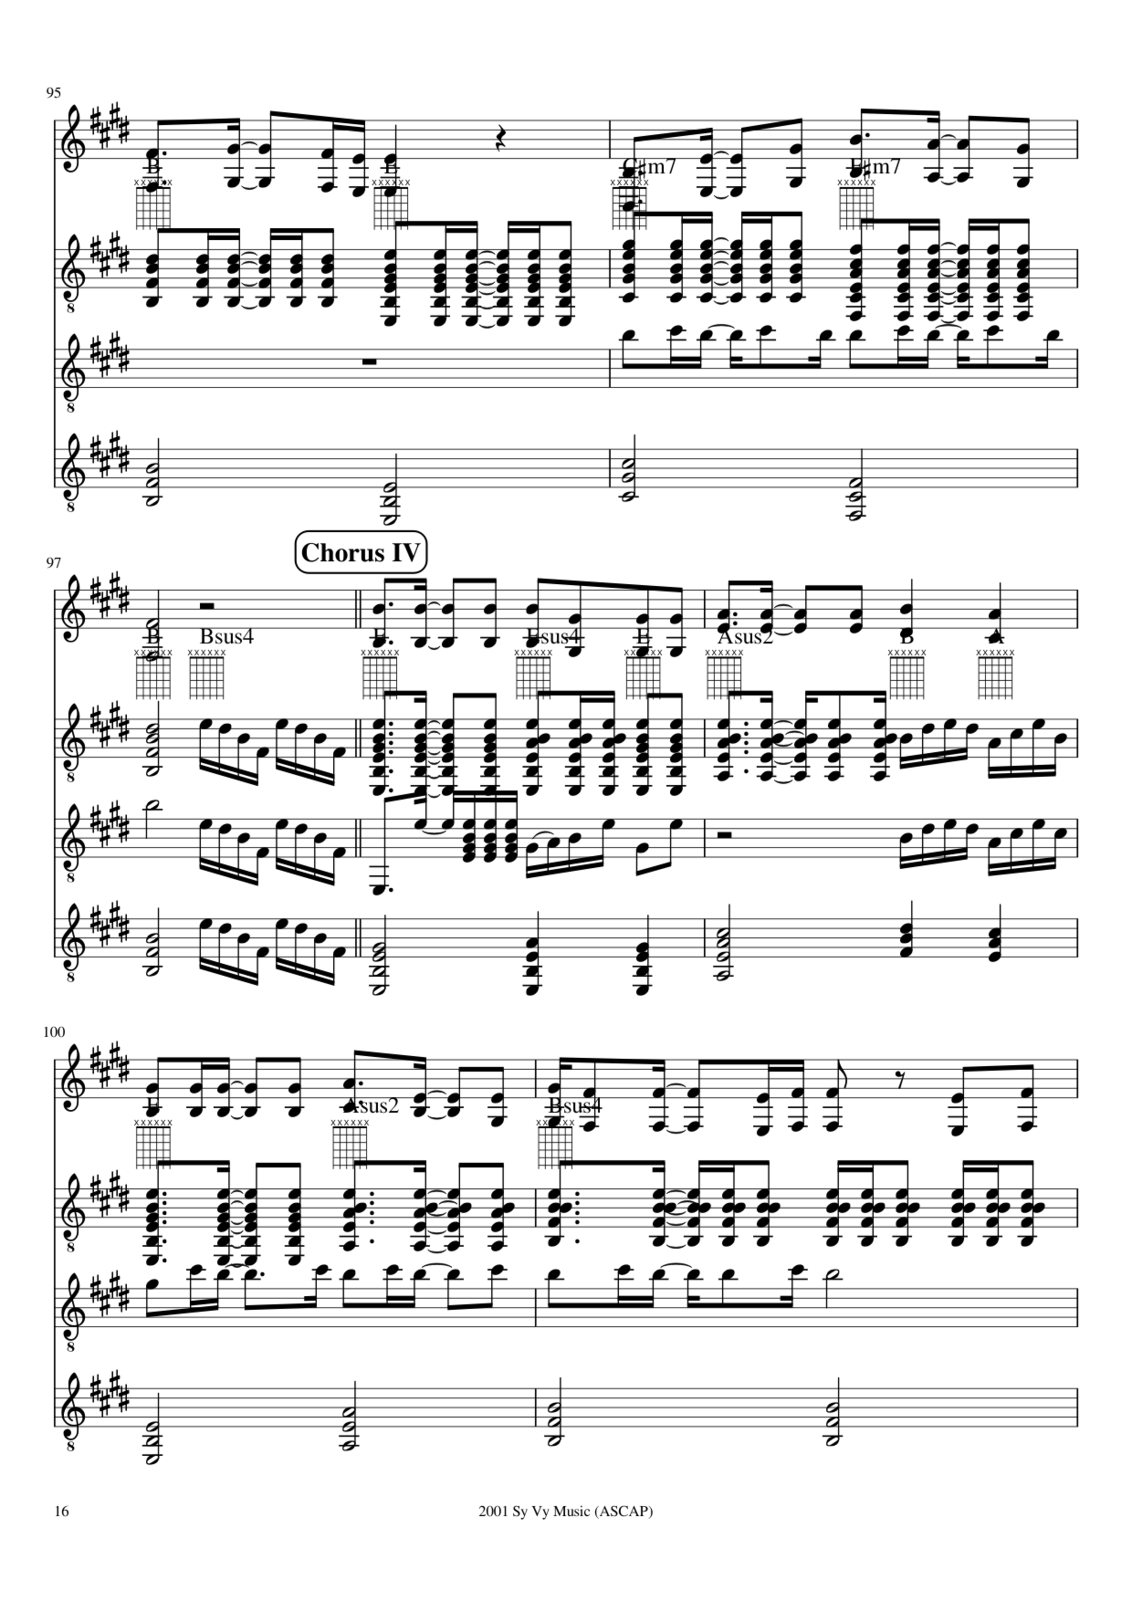 Gorod, kotorogo net slide, Image 17